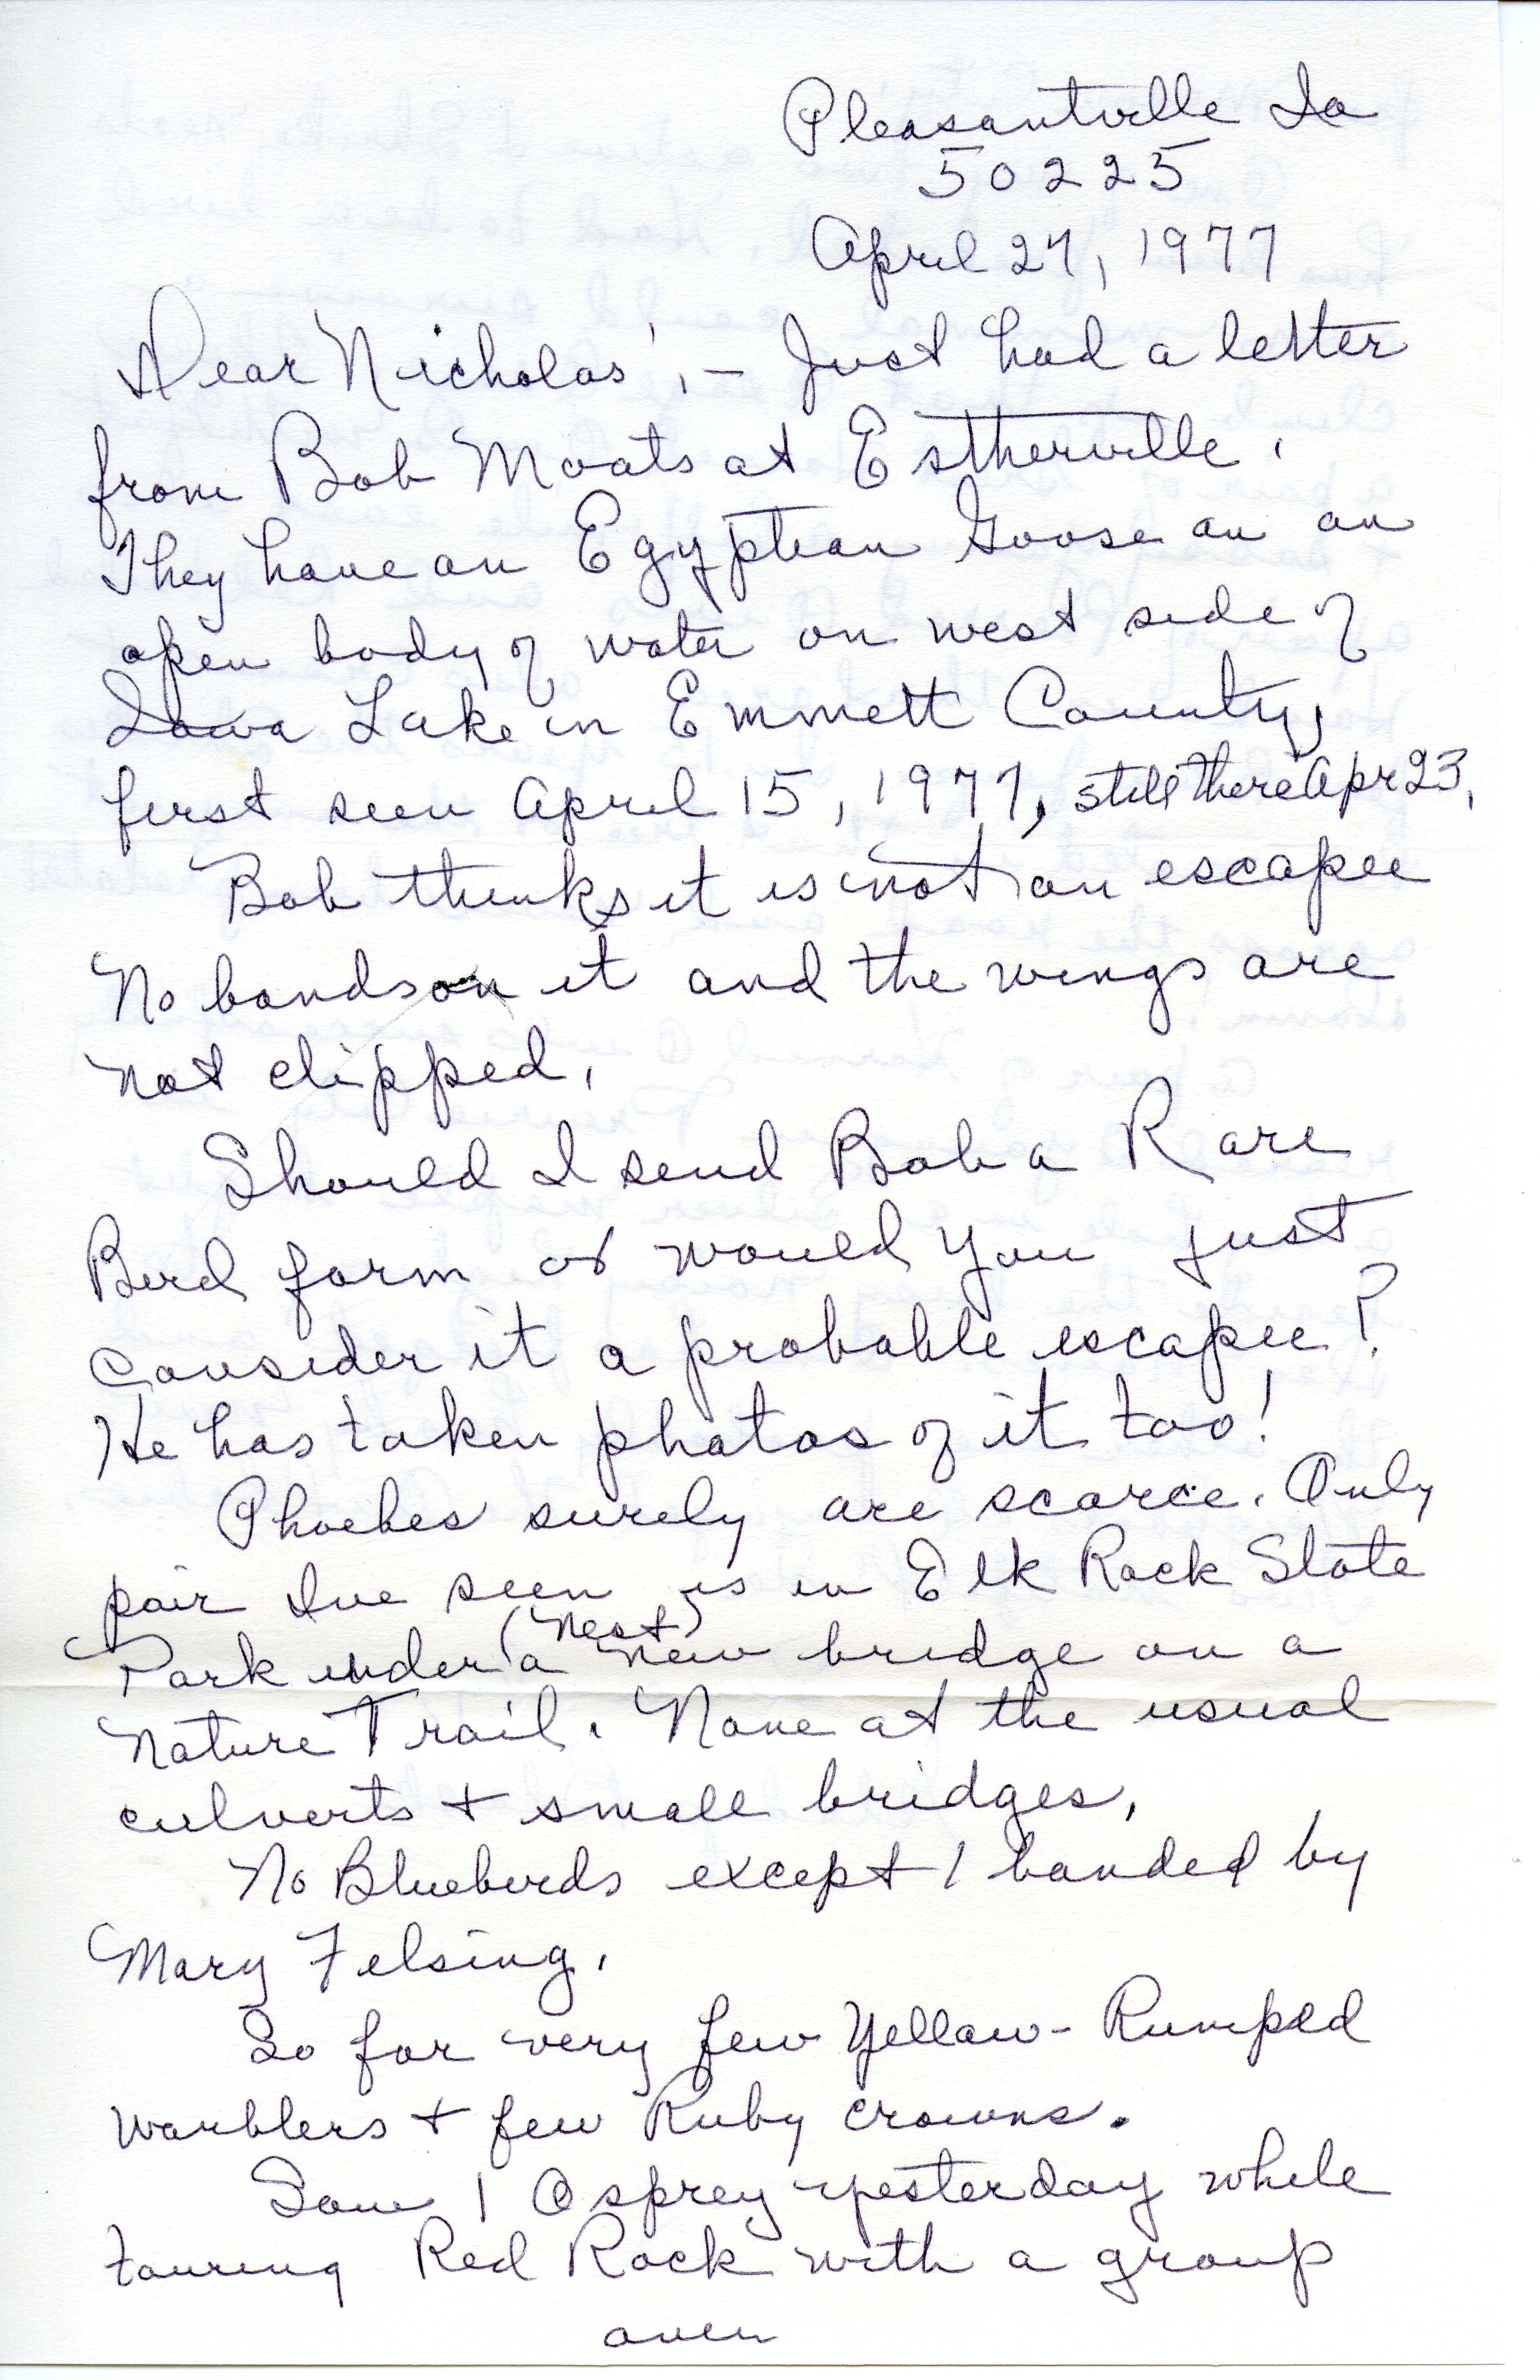 Gladys Black letter to Nicholas S. Halmi regarding bird watching, April 27, 1977 